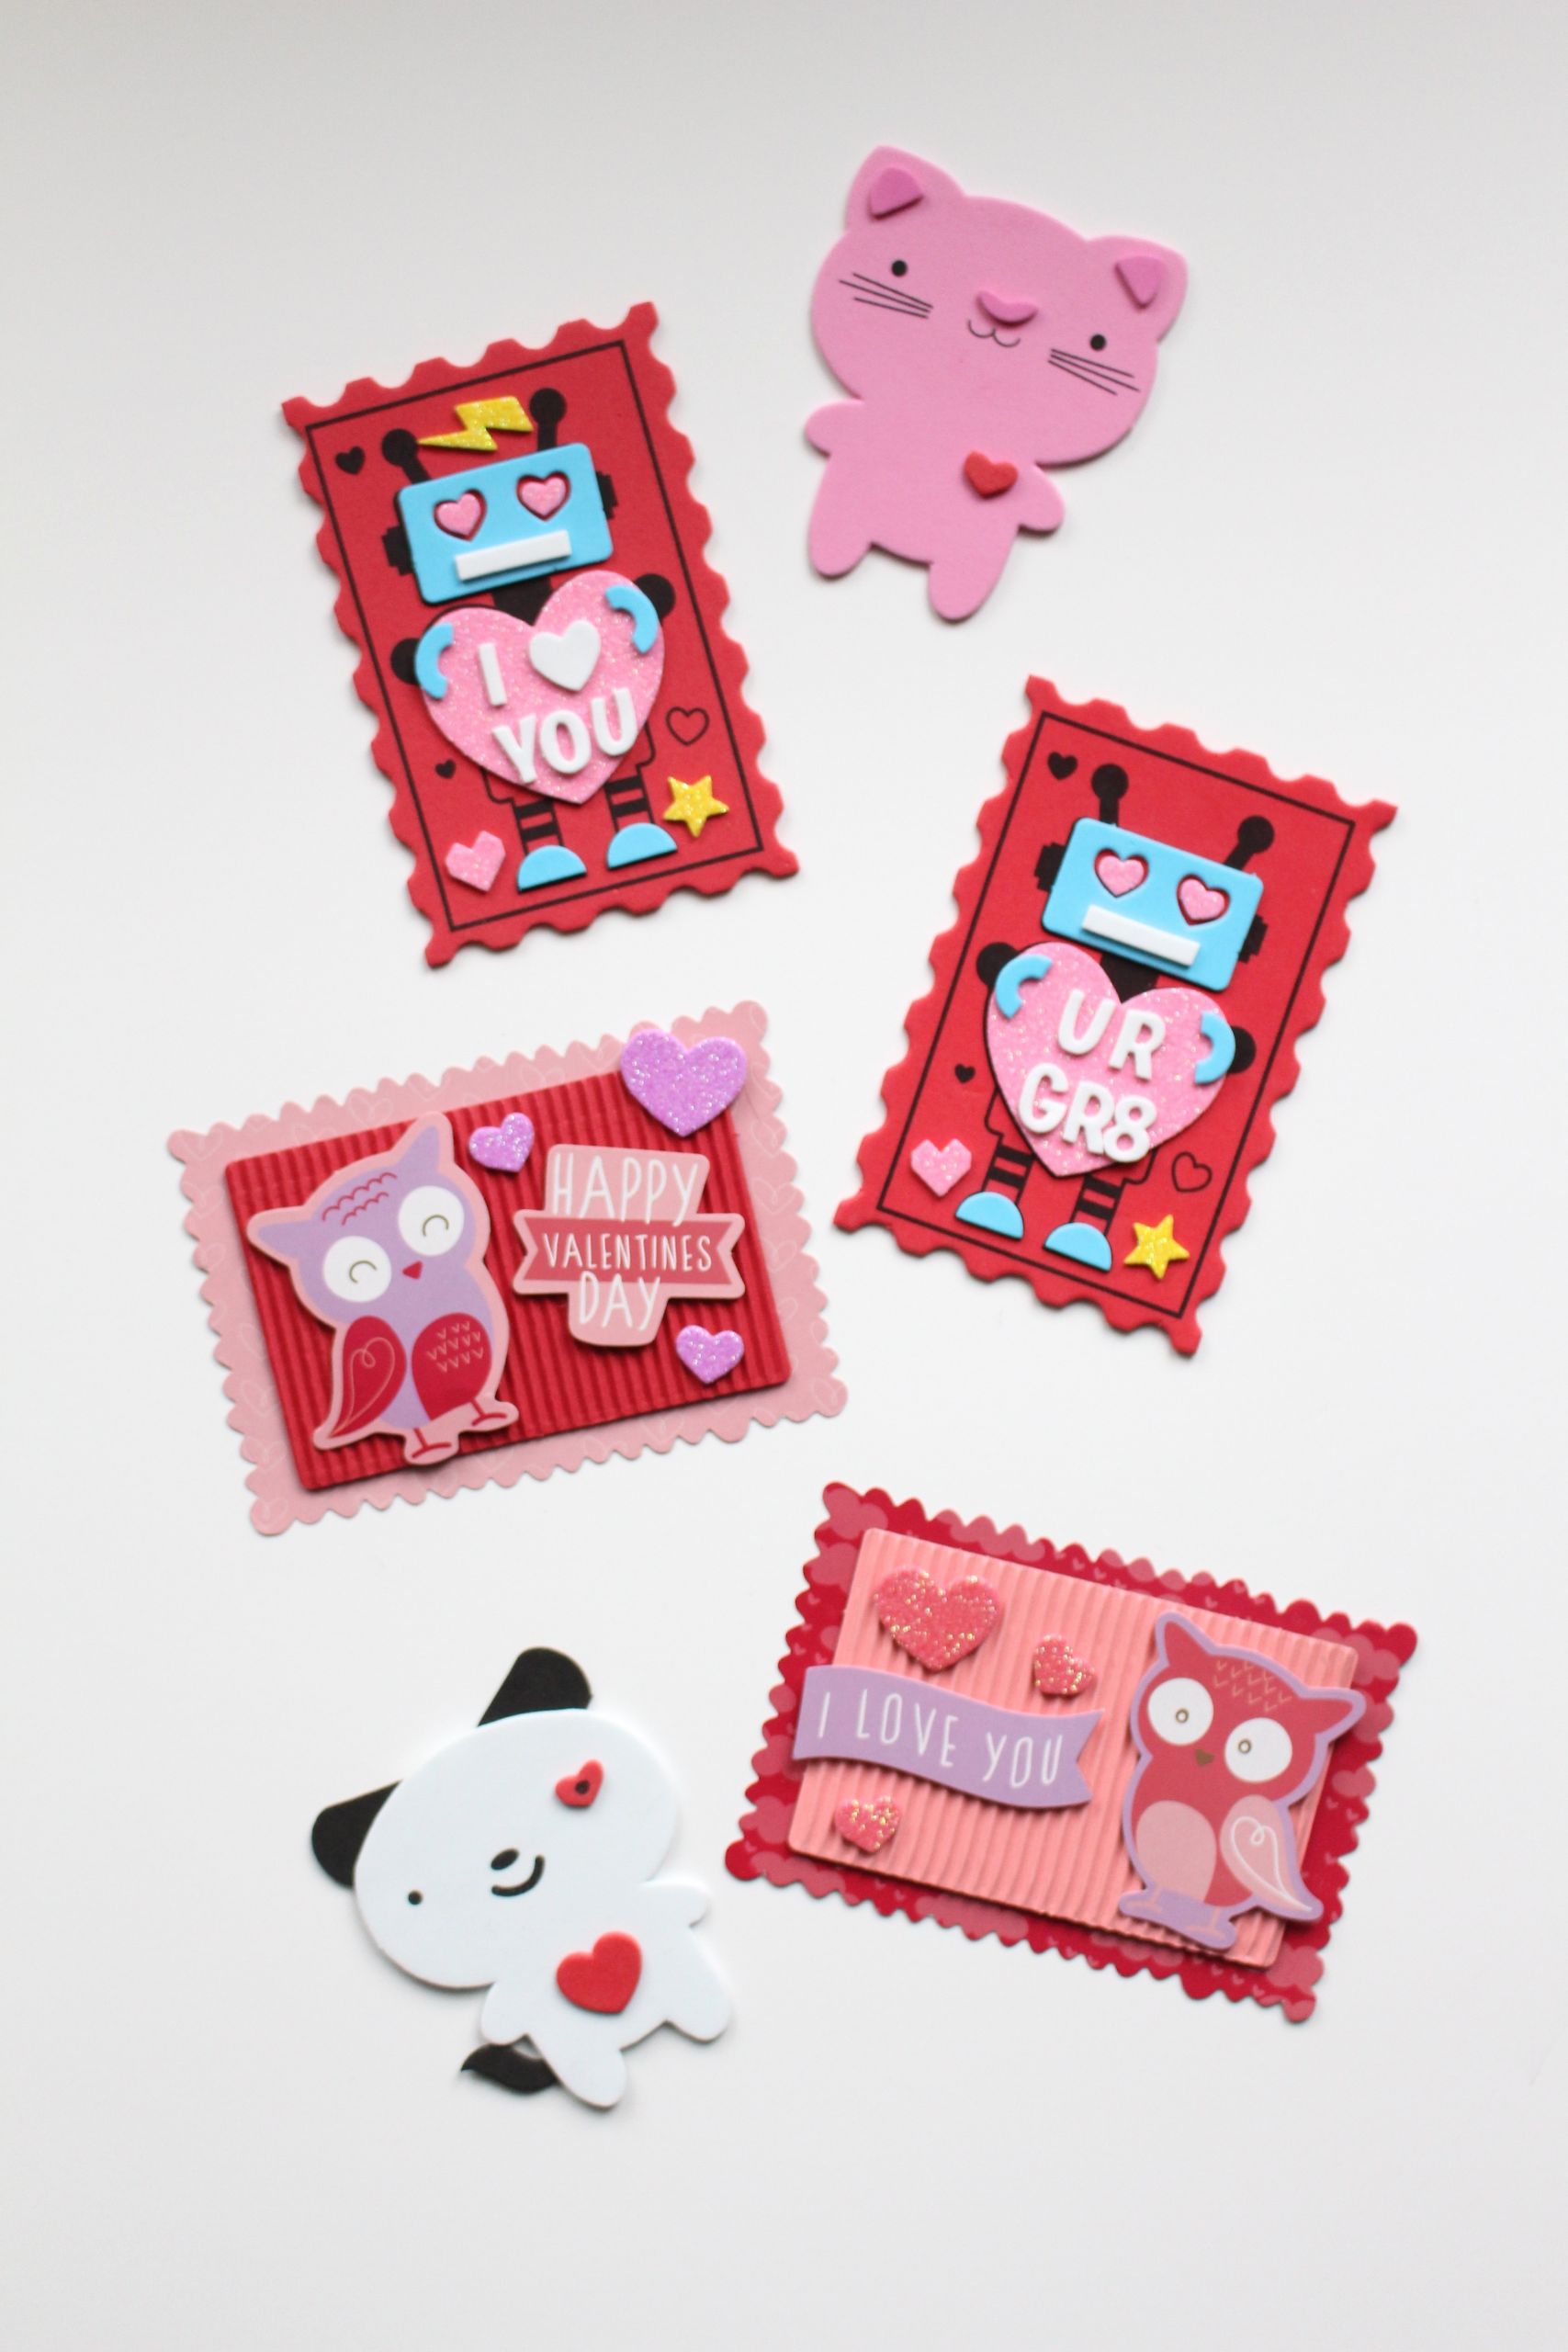 Valentine Gift Ideas For Parents
 DIY Valentine s Day Ideas for Kids